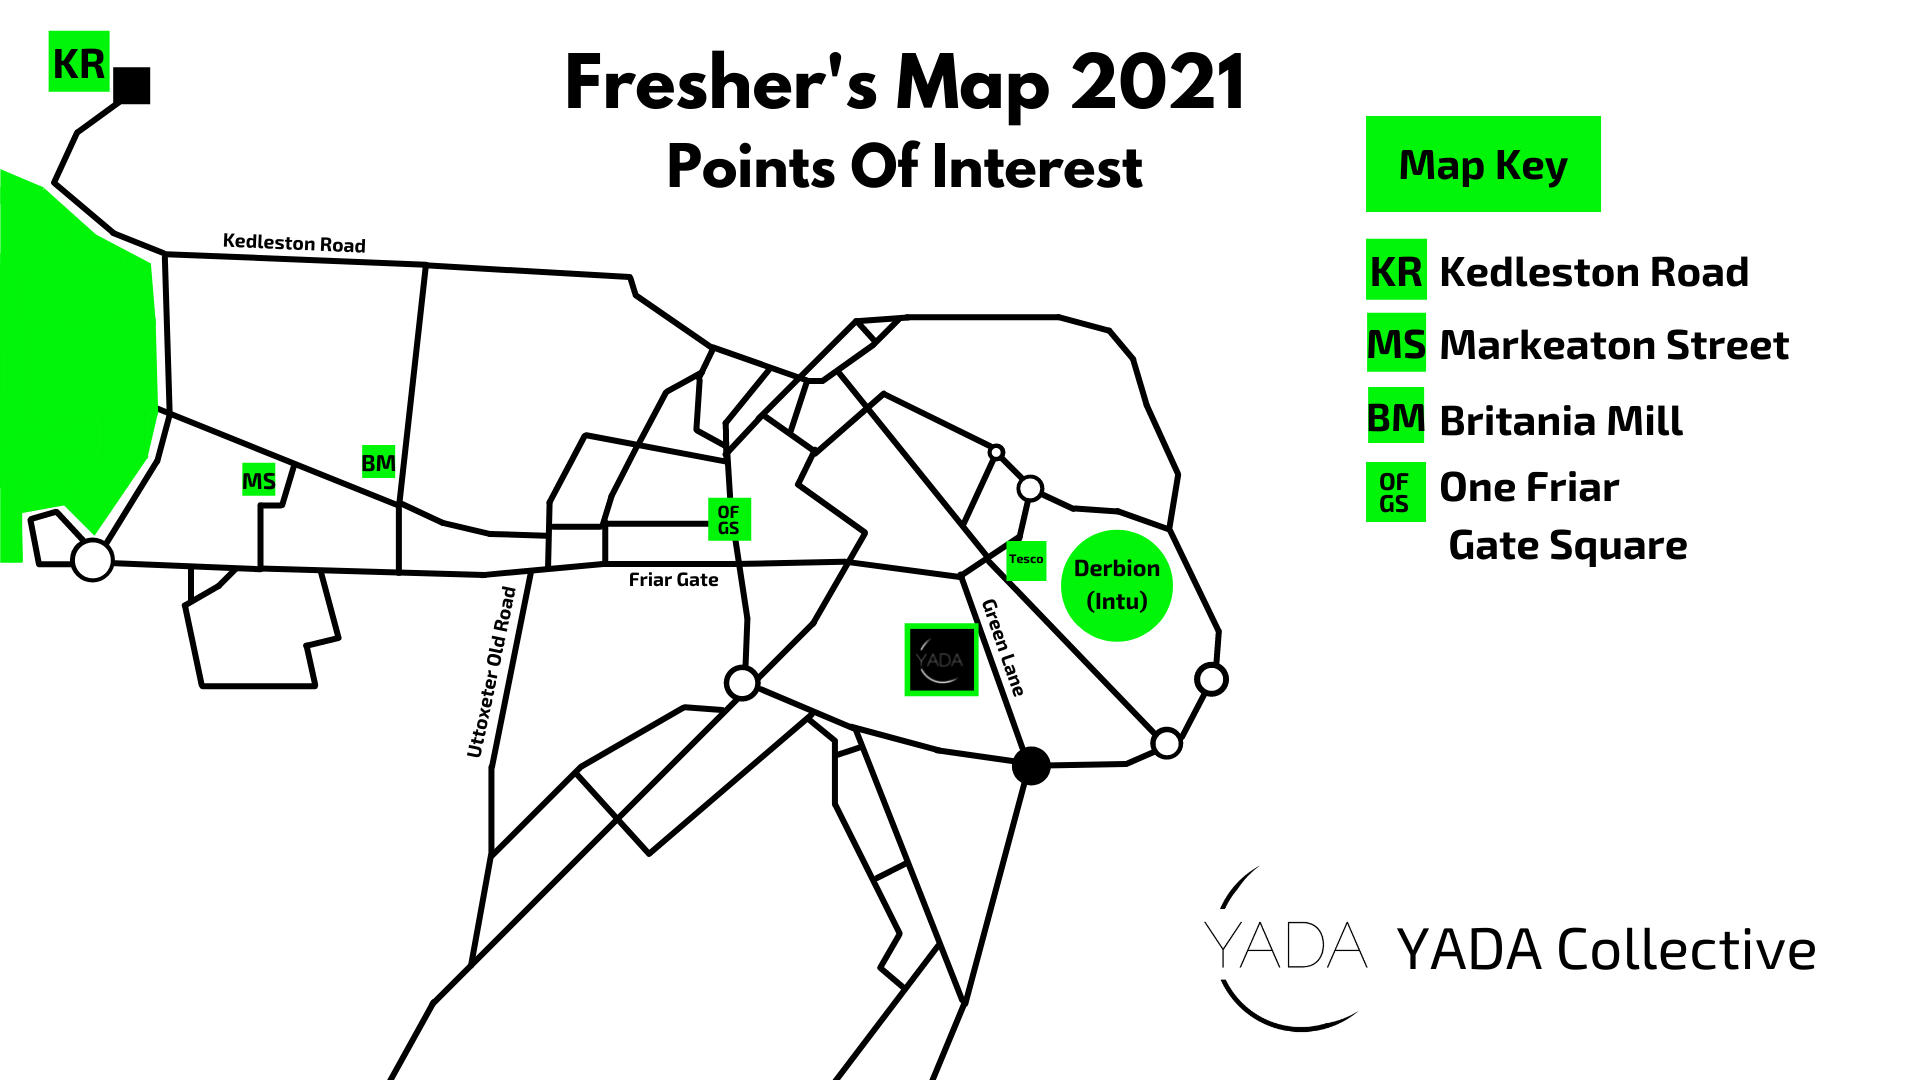 Fresher's Map of hangout spots in Derby